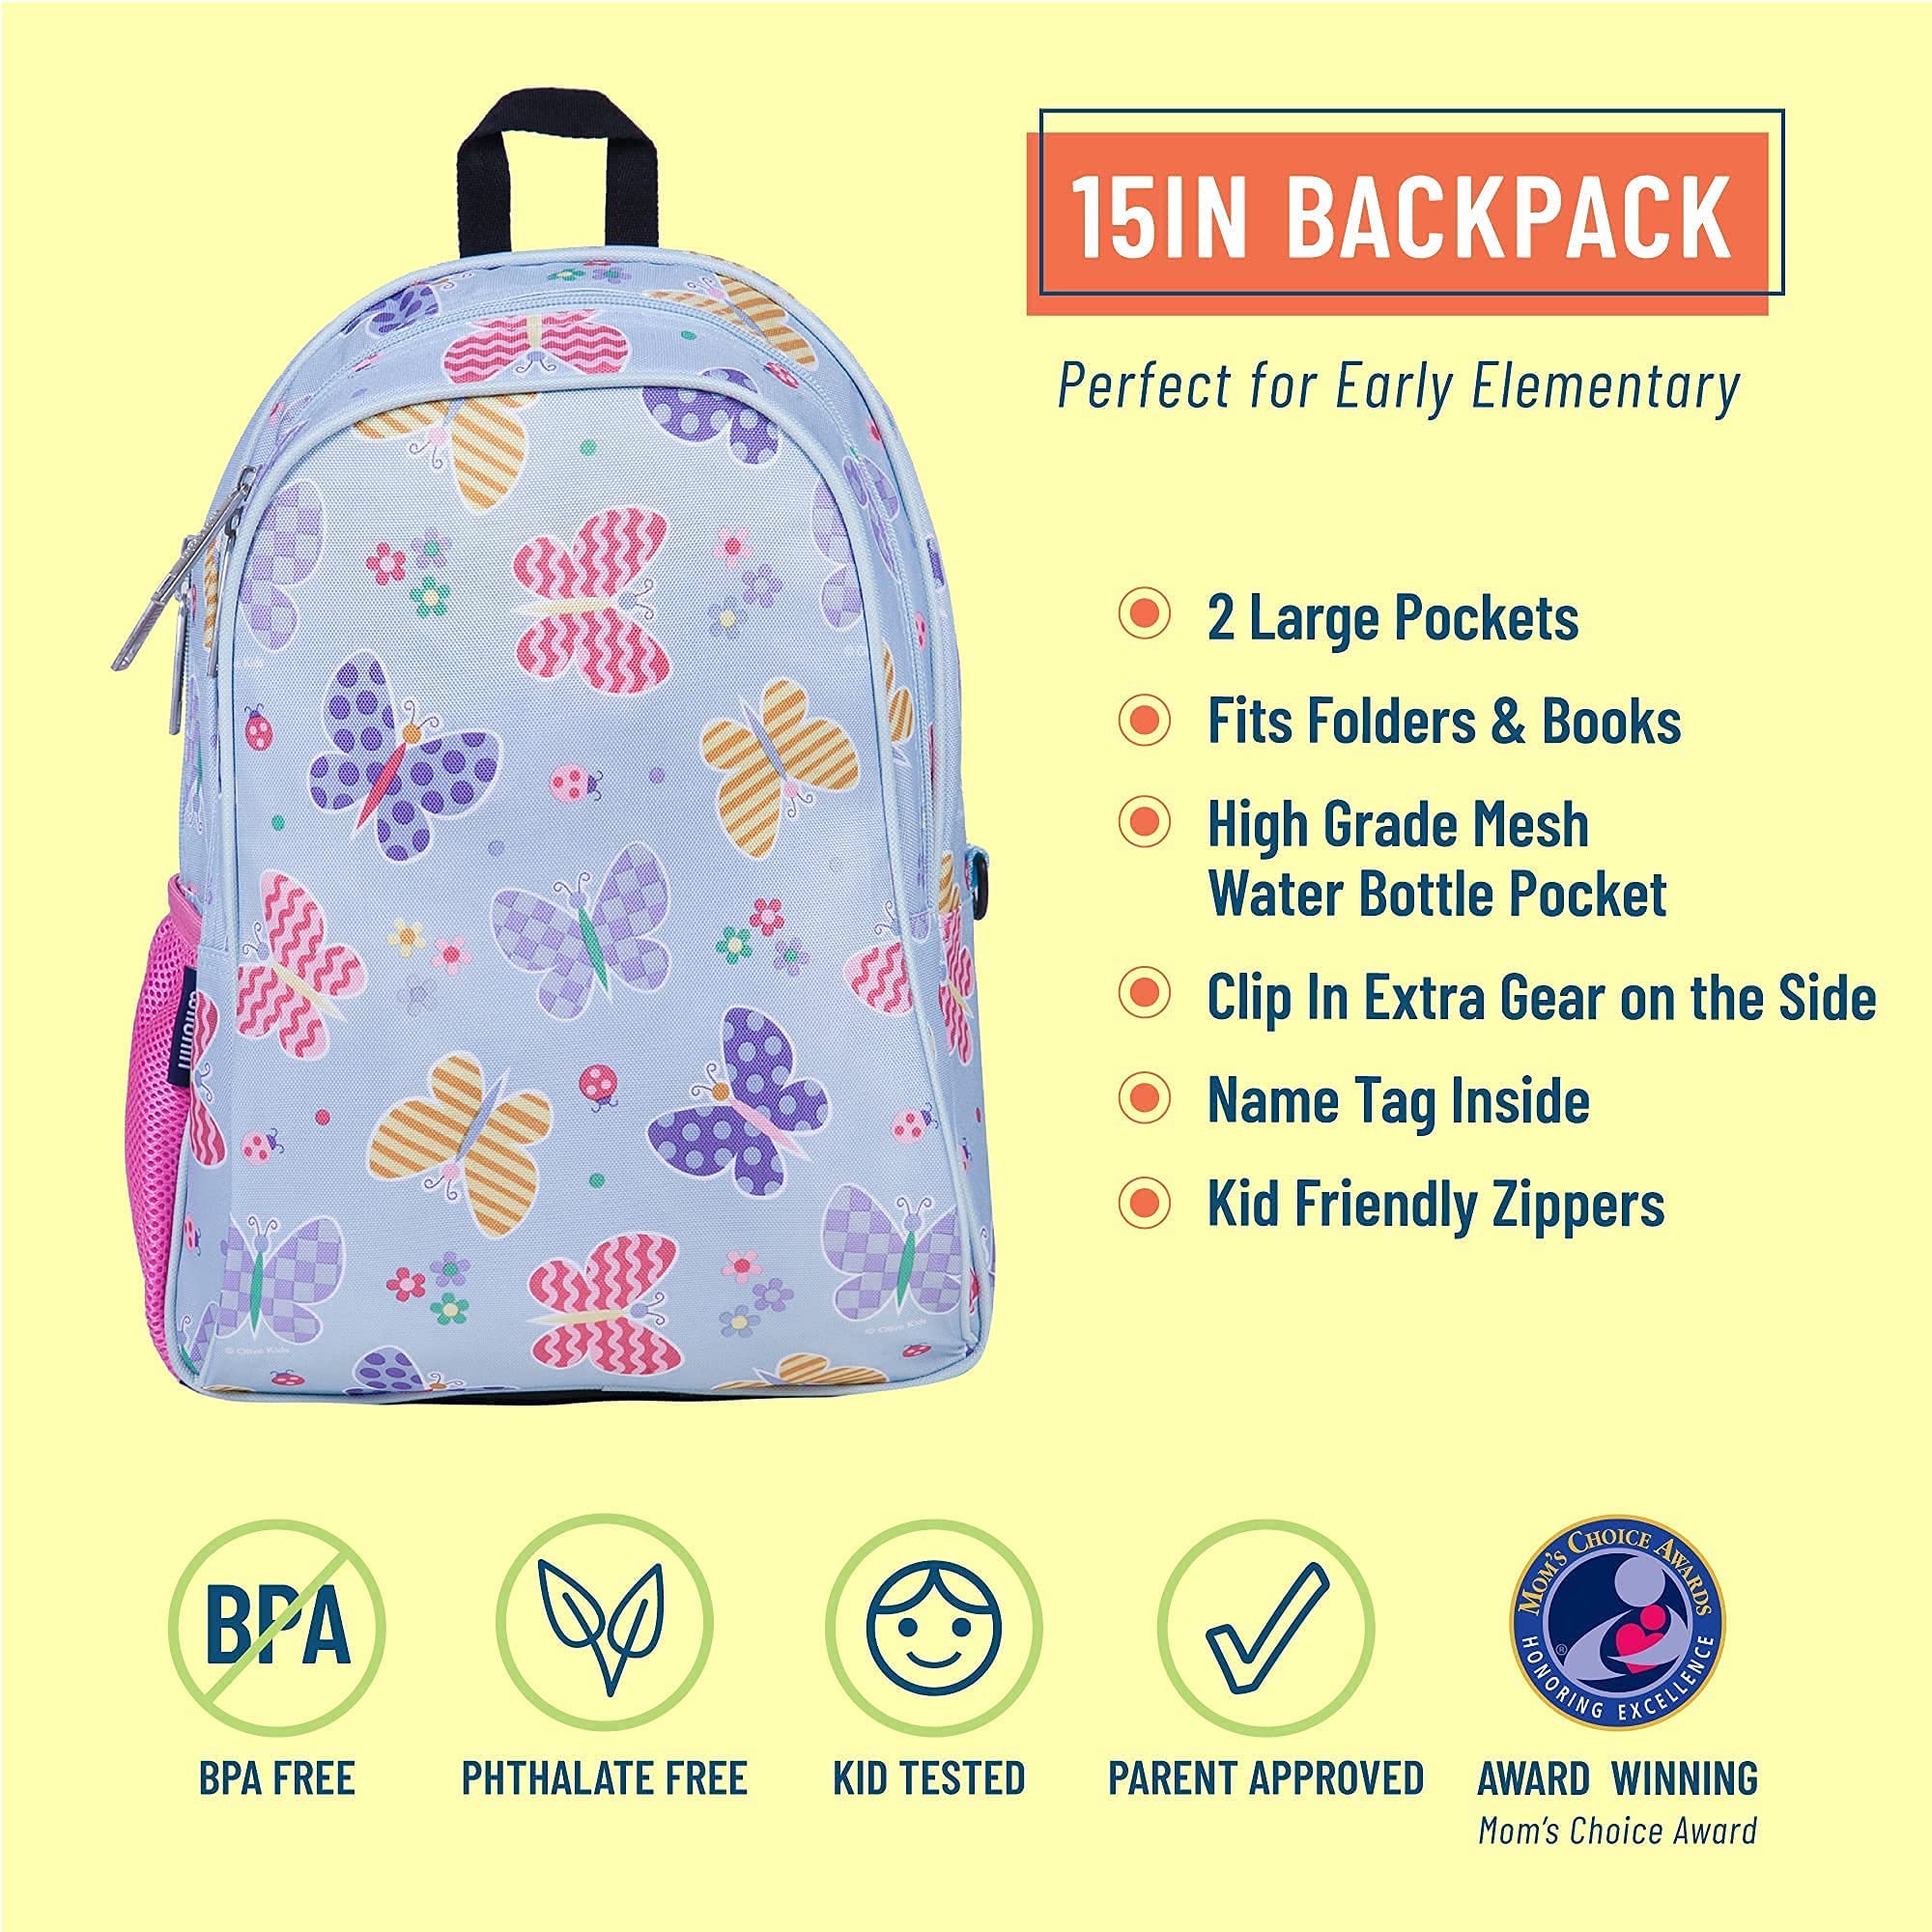 Wildkin 15 Inch Kids Backpack Bundle with Lunch Box Bag (Butterfly Garden)